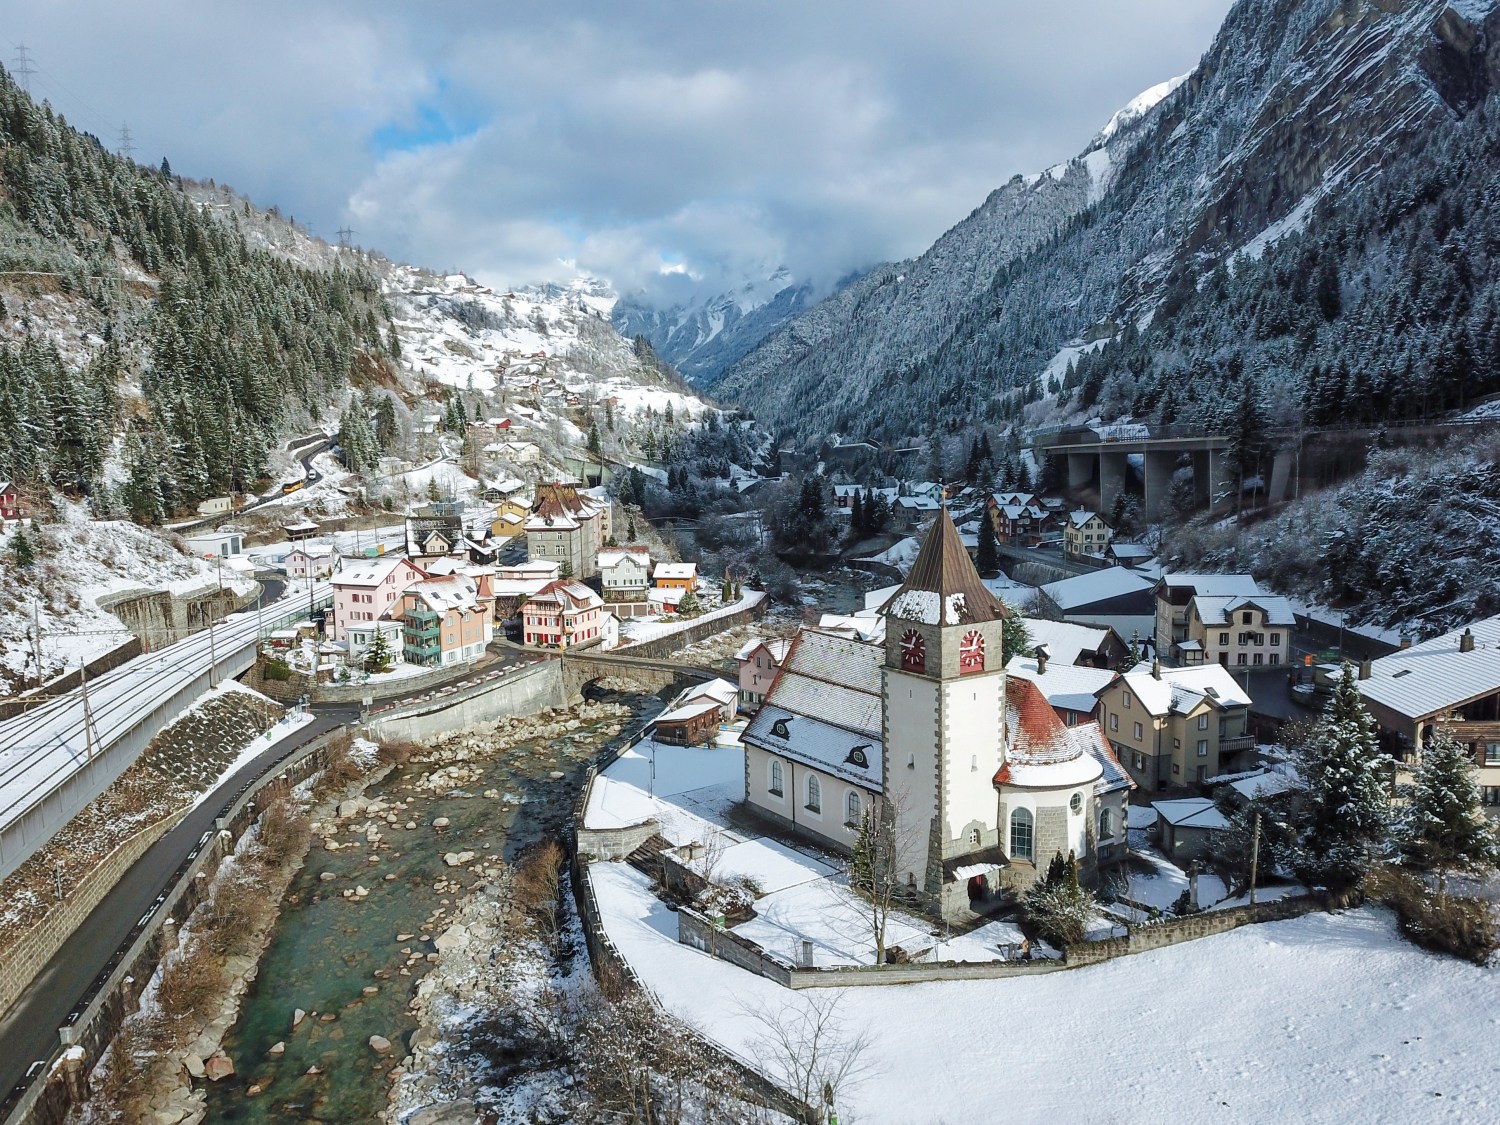 Gurtnellen town covered in snow